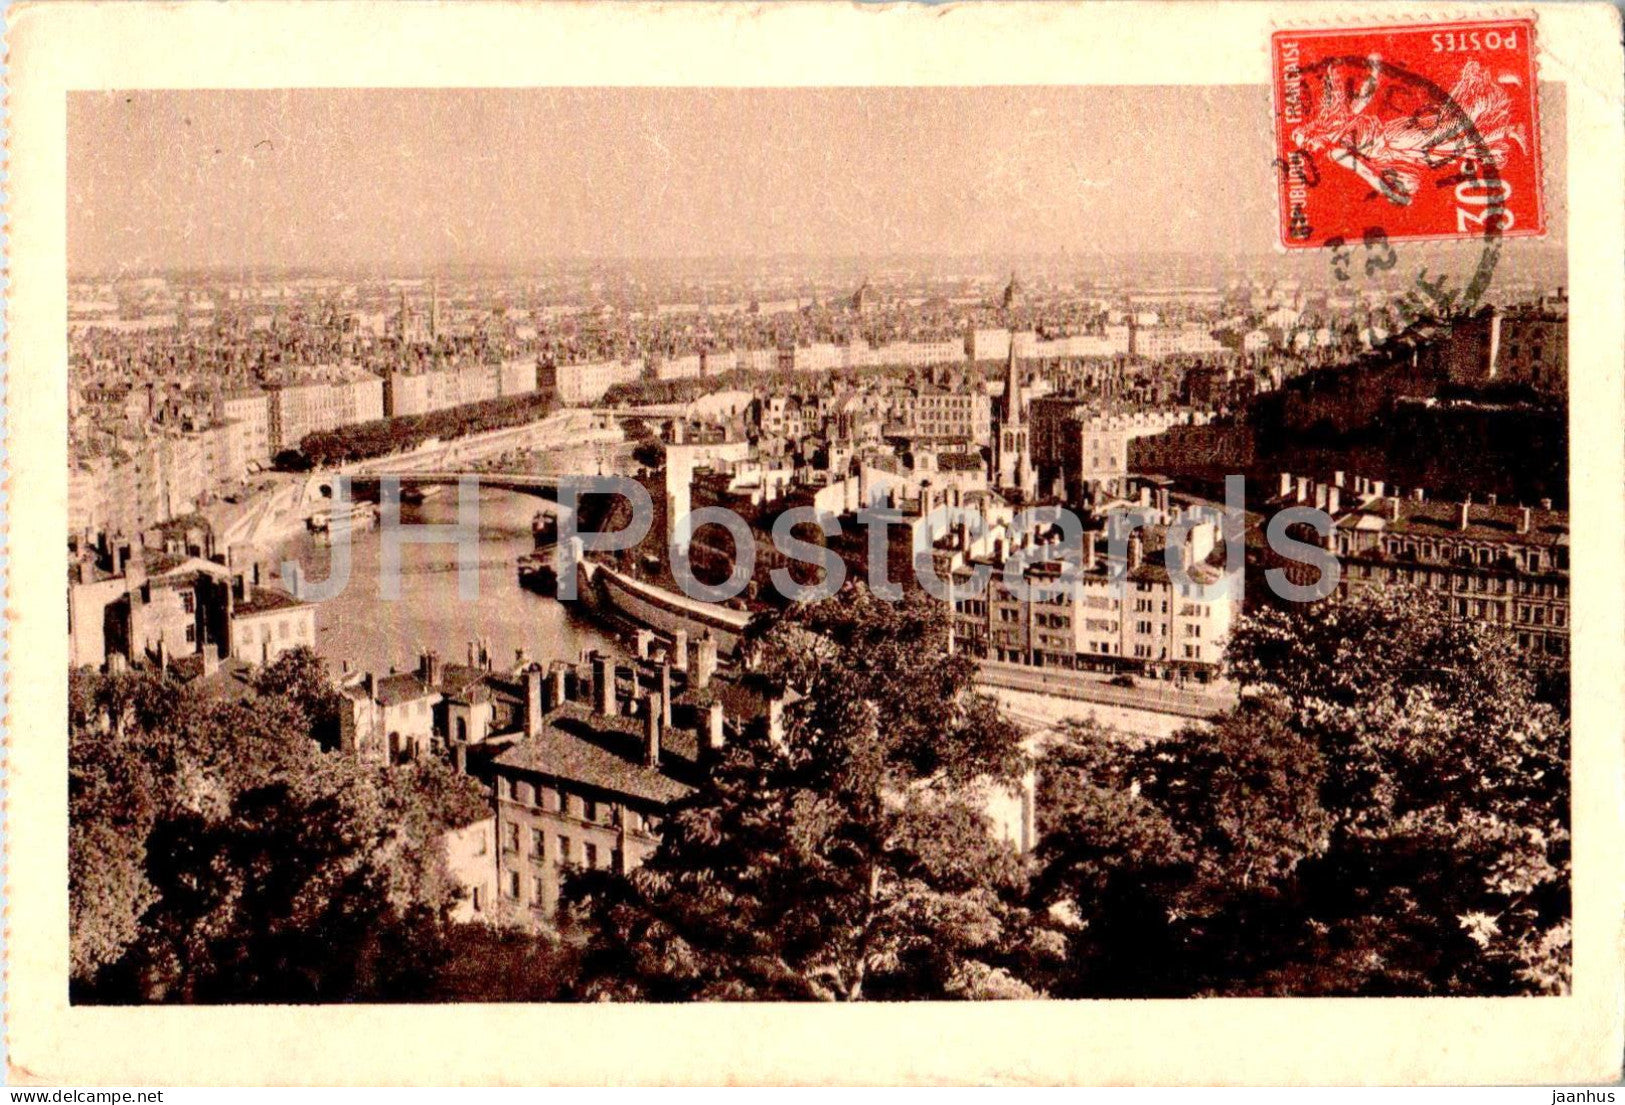 Lyon - La Saone - Passerelle St Vincent - Pont La Feuillee - 335 - old postcard - France - used - JH Postcards